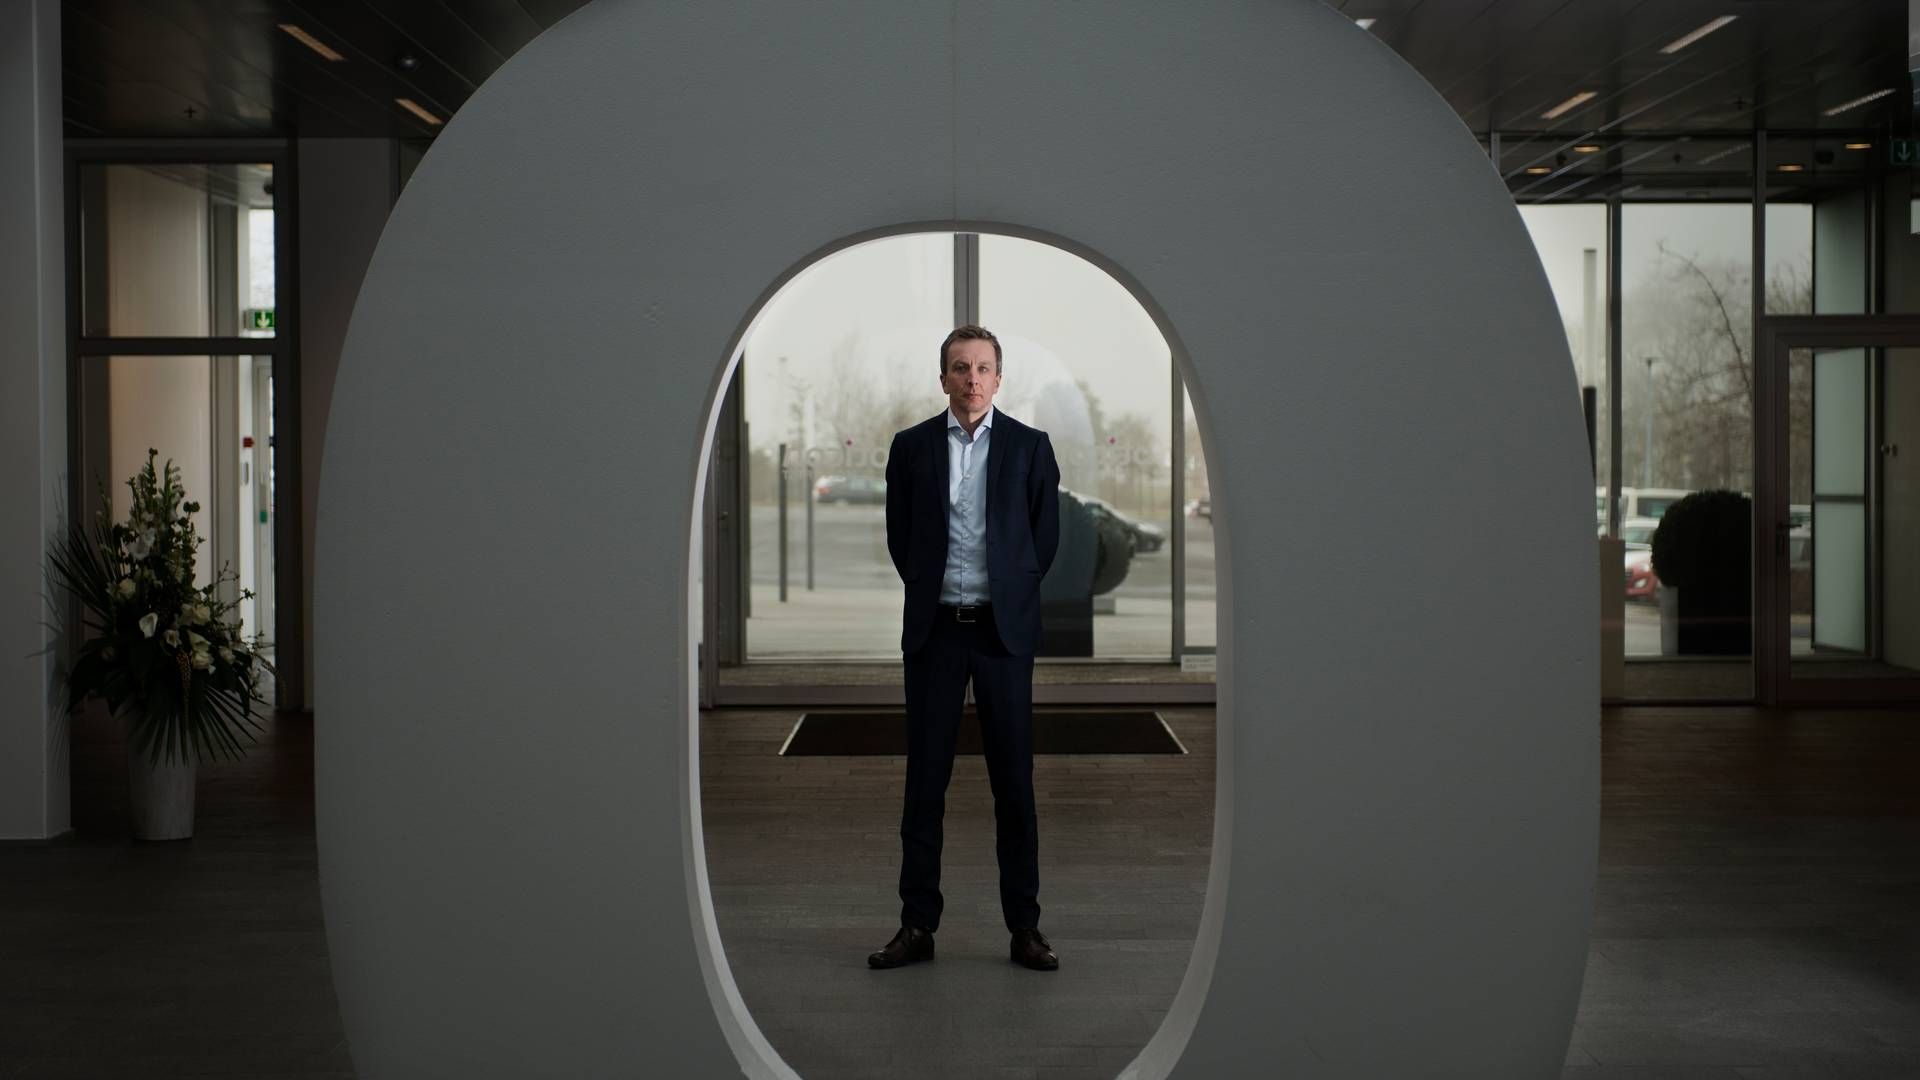 Søren Nielsen is CEO of Demant. | Photo: Kenneth Lysbjerg Koustrup